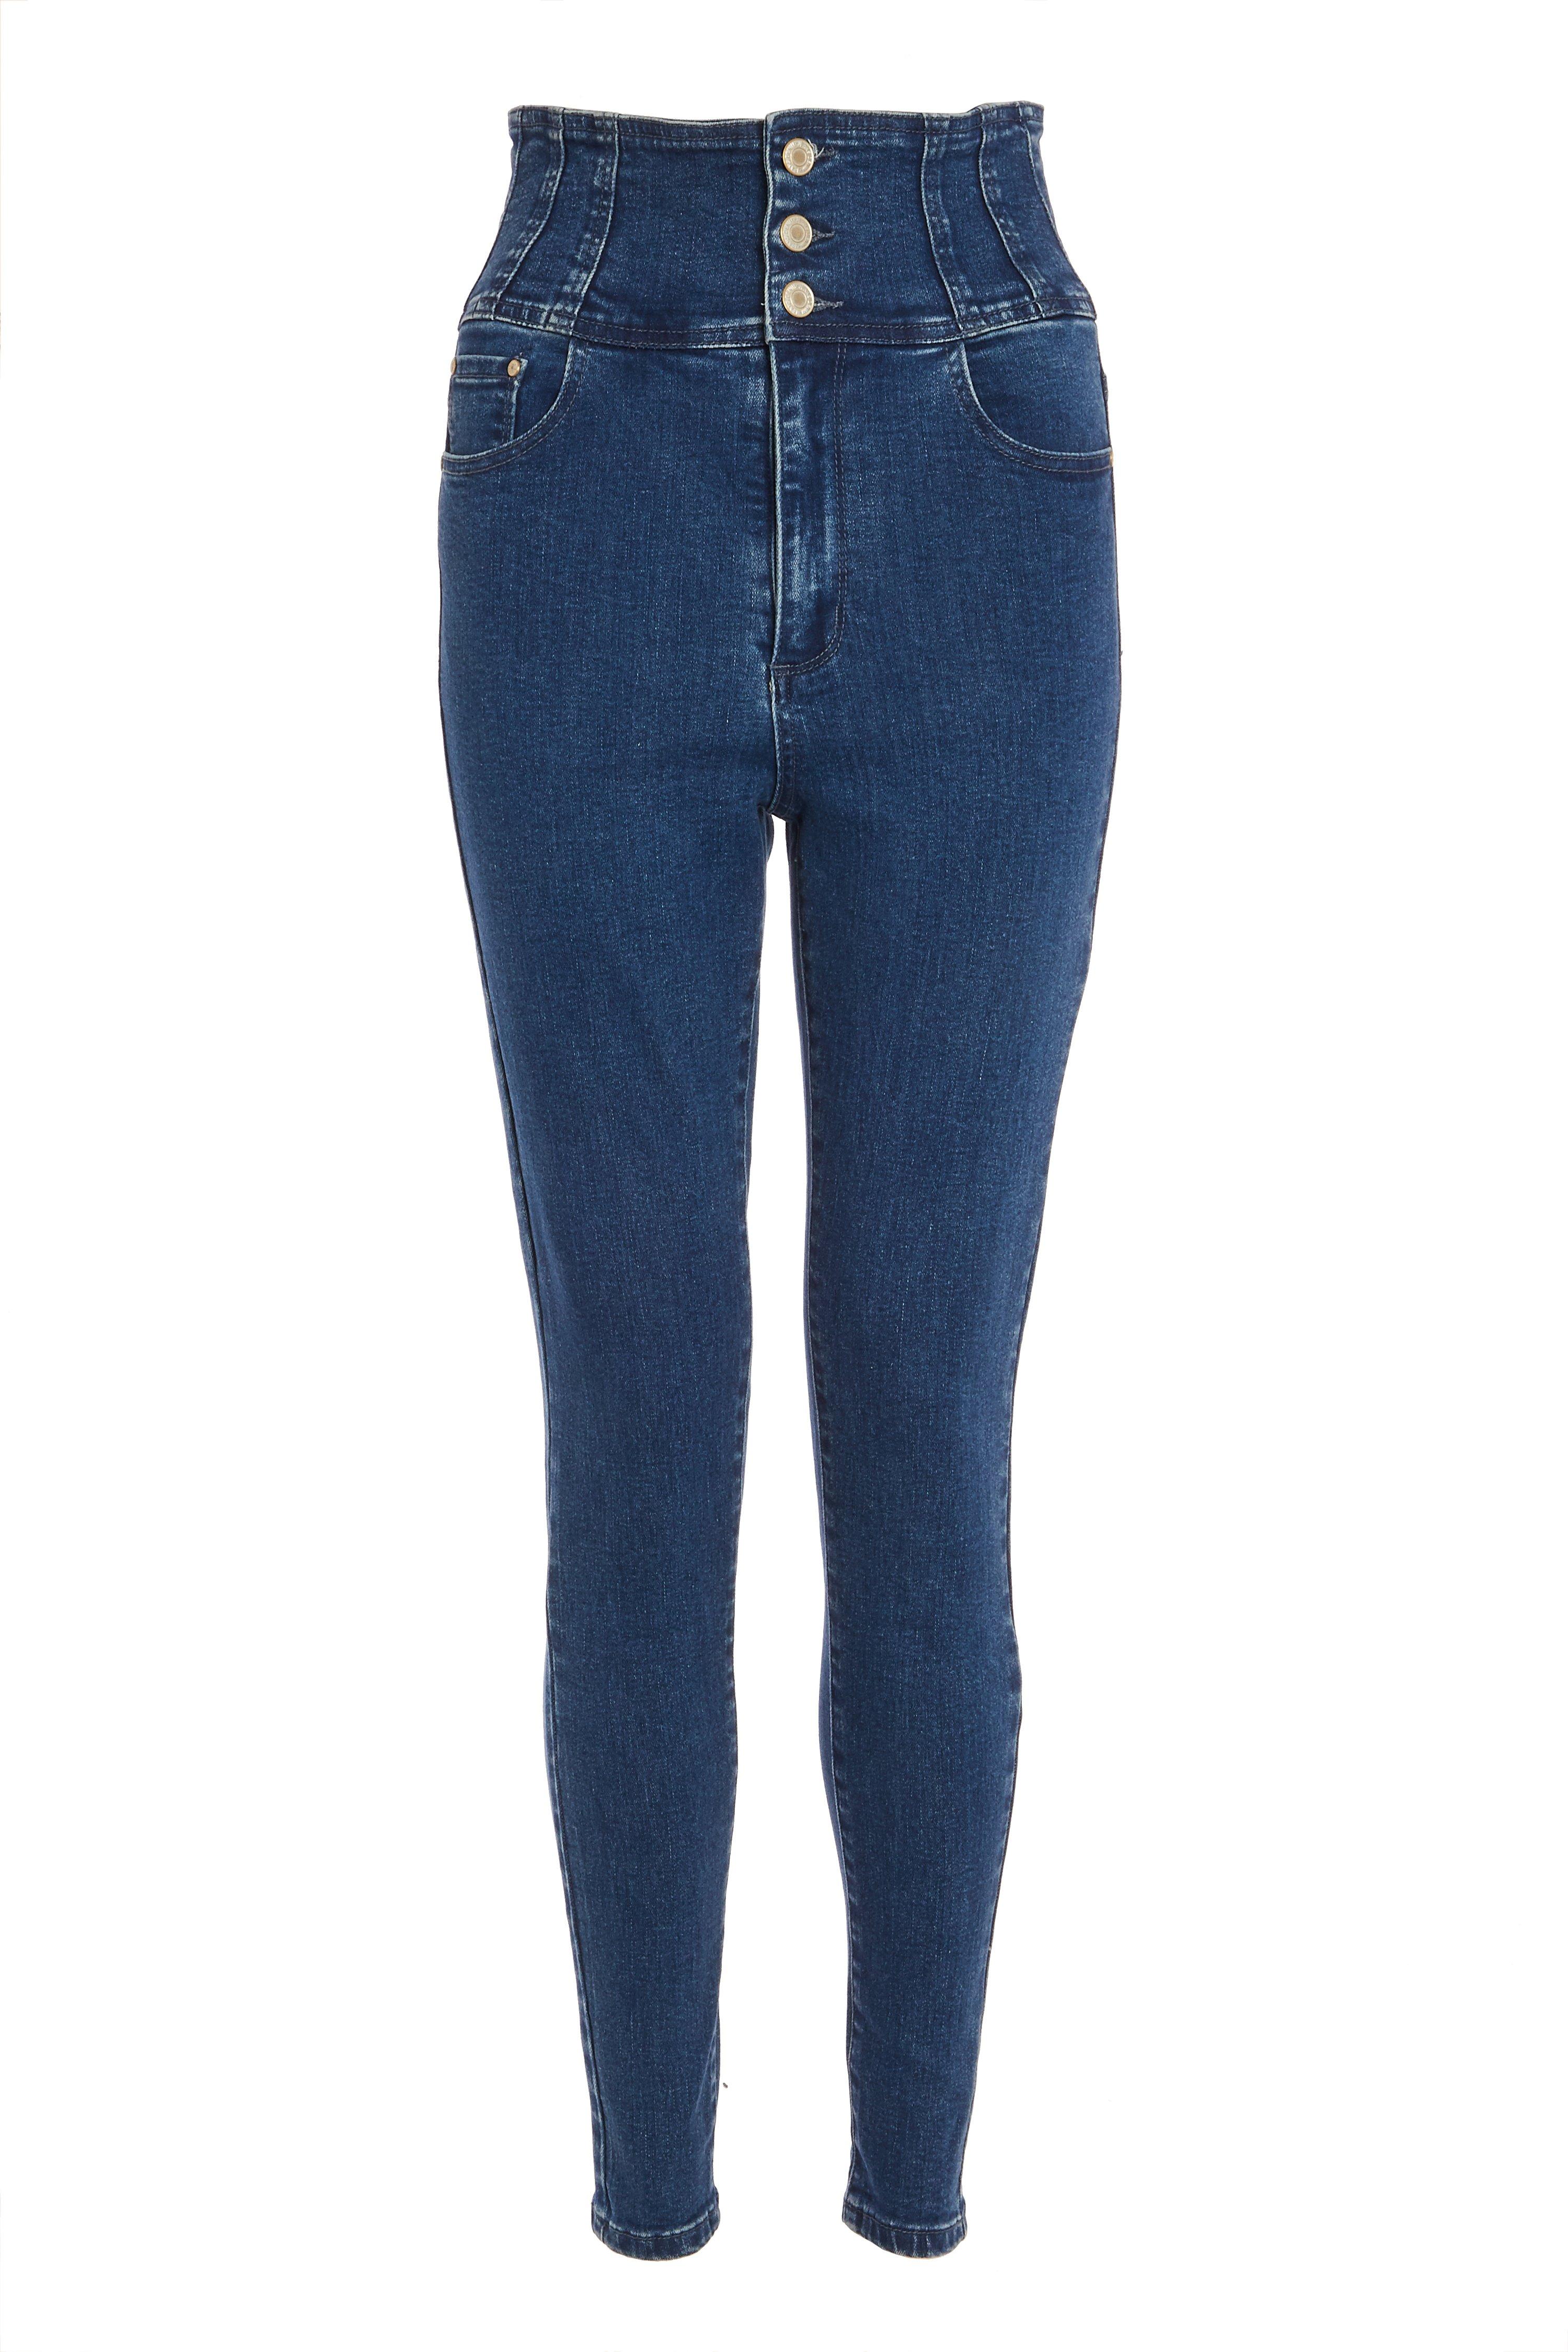 Women’s Jeans | Split Hem, High Waisted & Mom Jeans | QUIZ